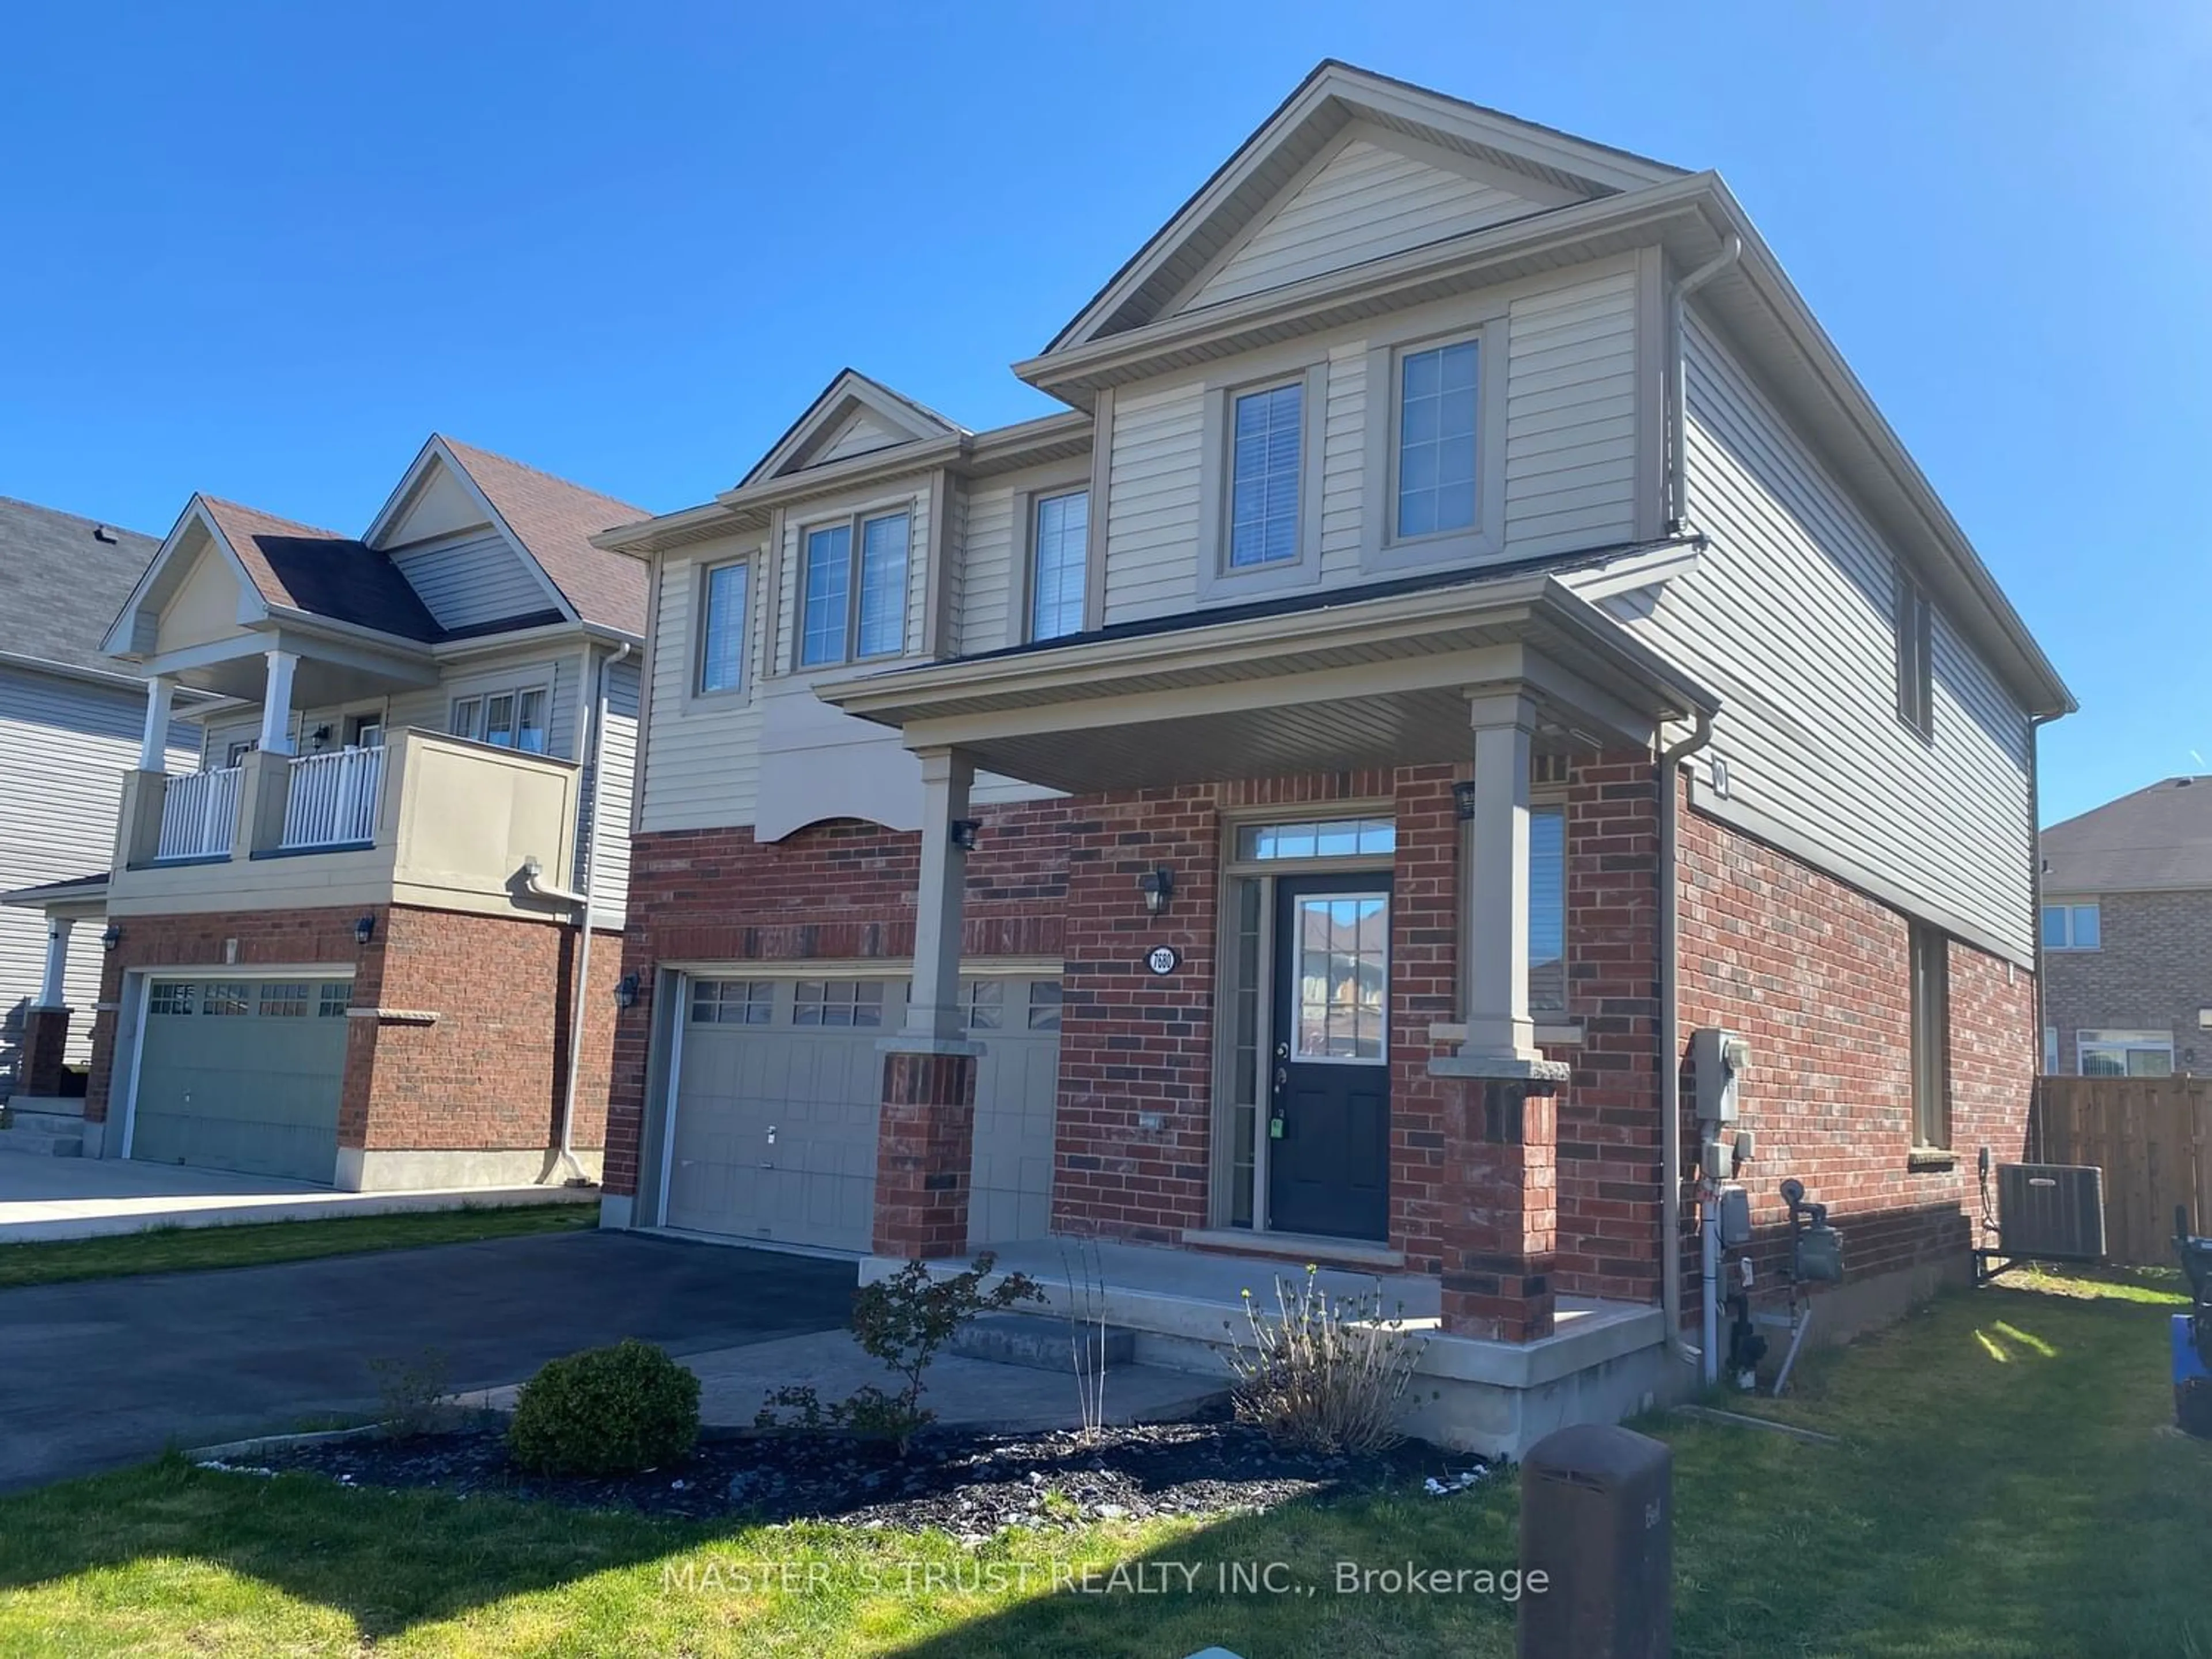 Home with brick exterior material for 7680 Butternut Blvd, Niagara Falls Ontario L2H 0K8